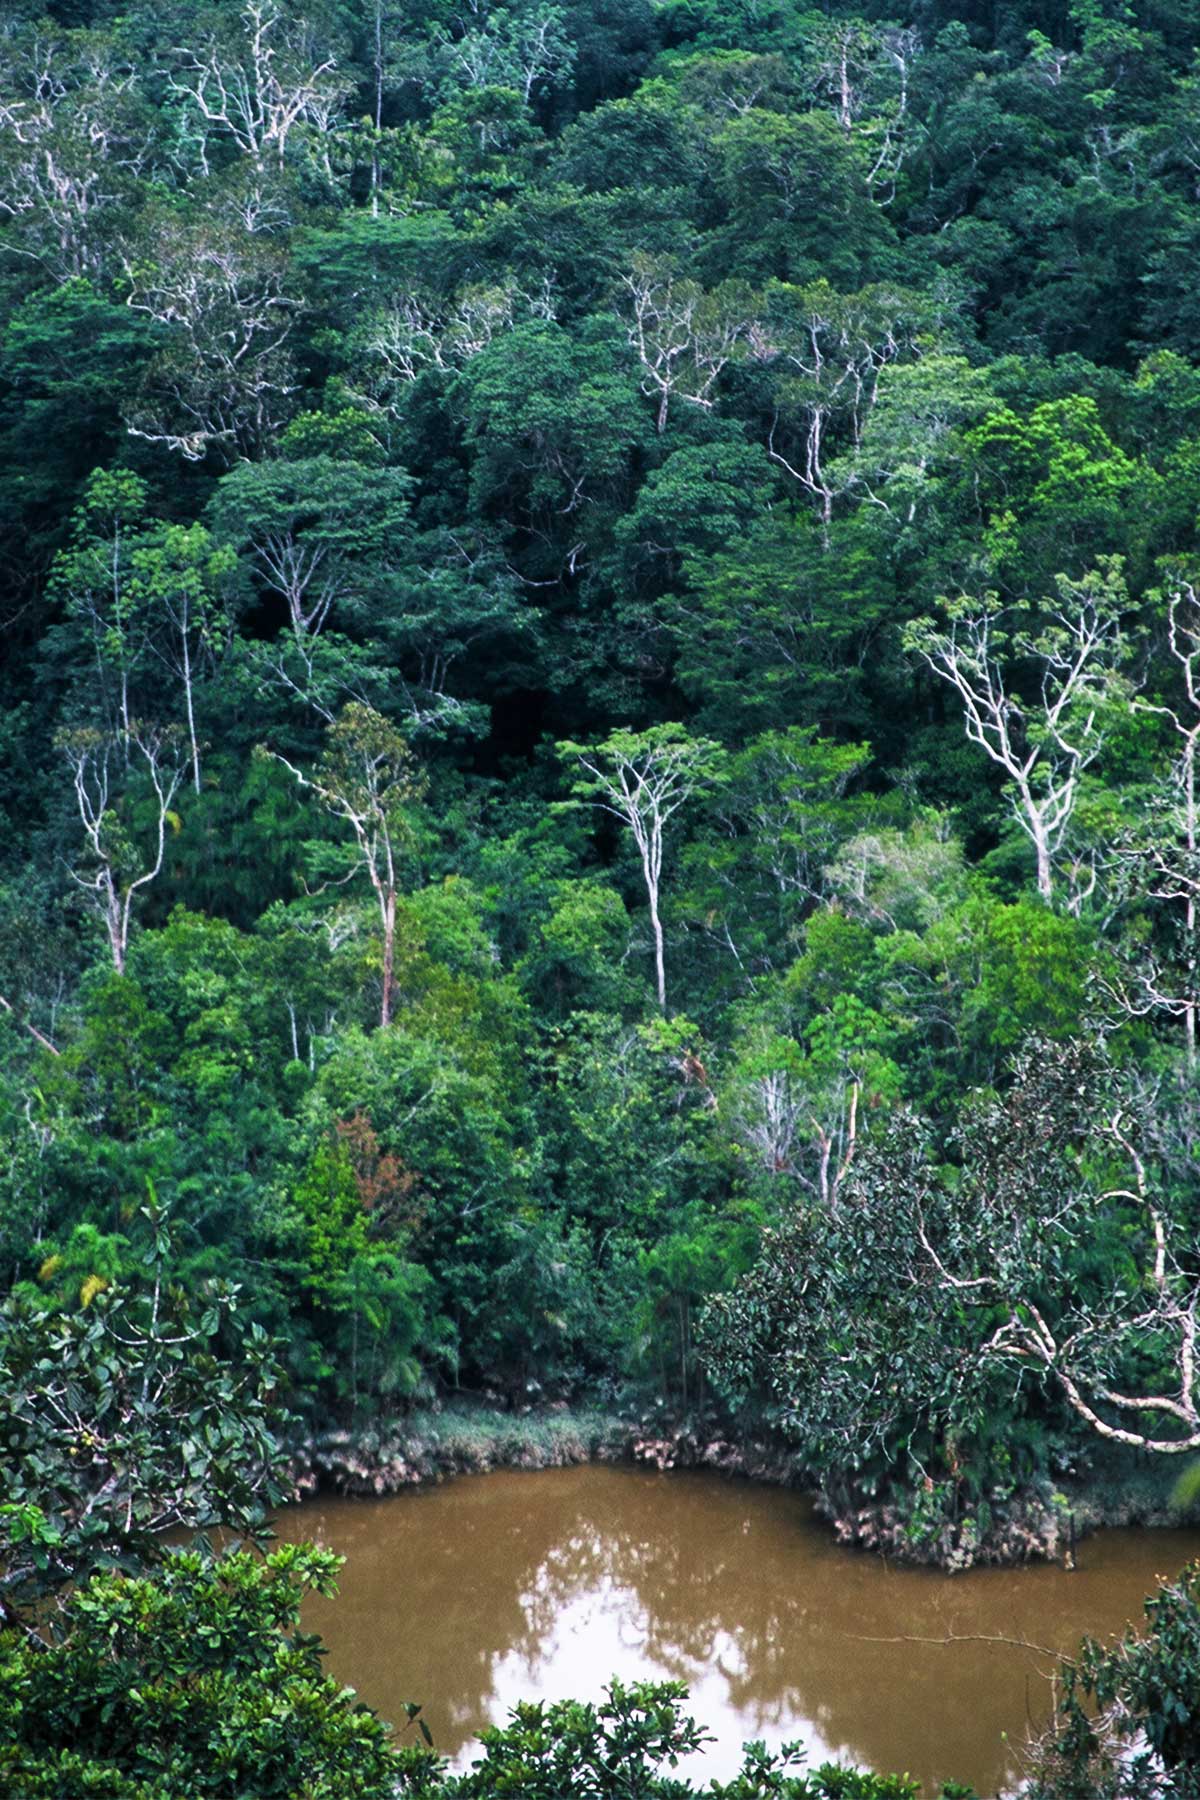 View of the Tiputini River below the Amazon Rainforest | Steven Andrew Martin | Environmental Research | Rio Tiputini Ecuador